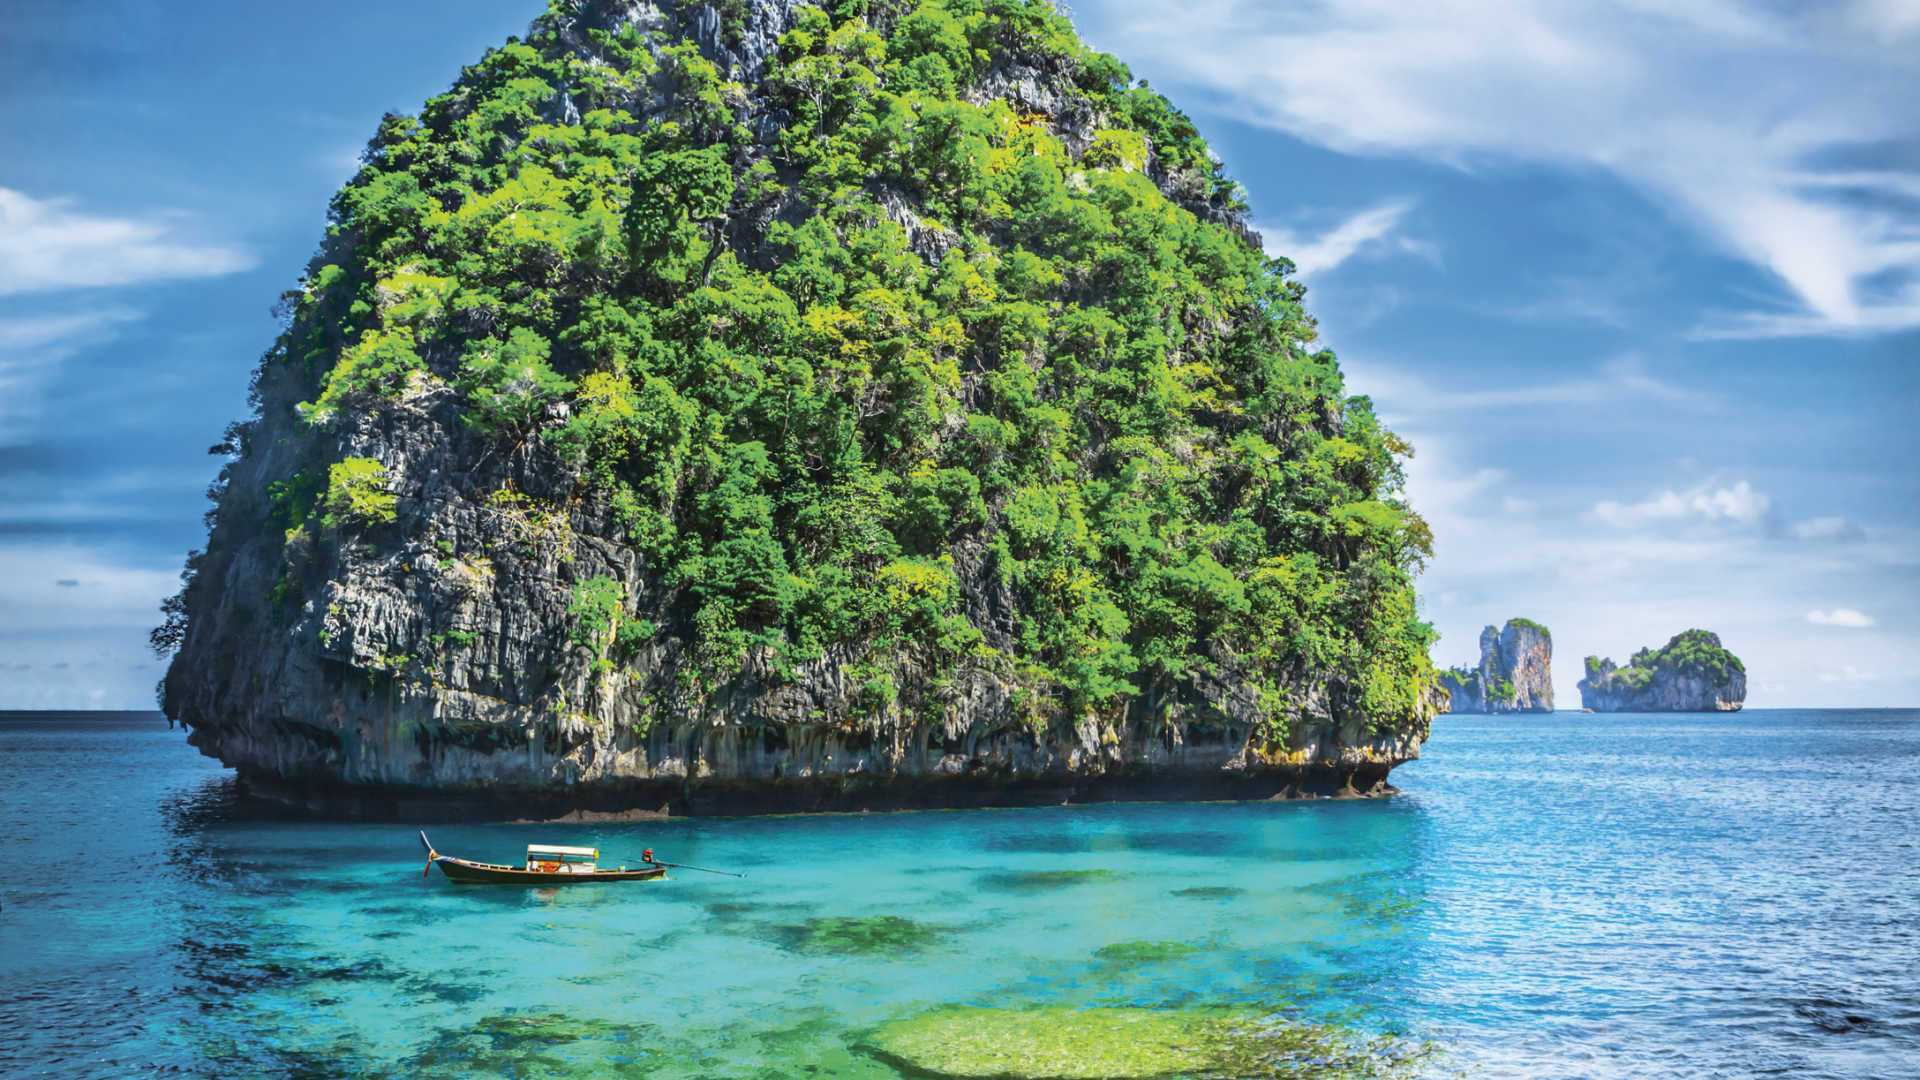 A One week Thailand honeymoon itinerary for the romantics